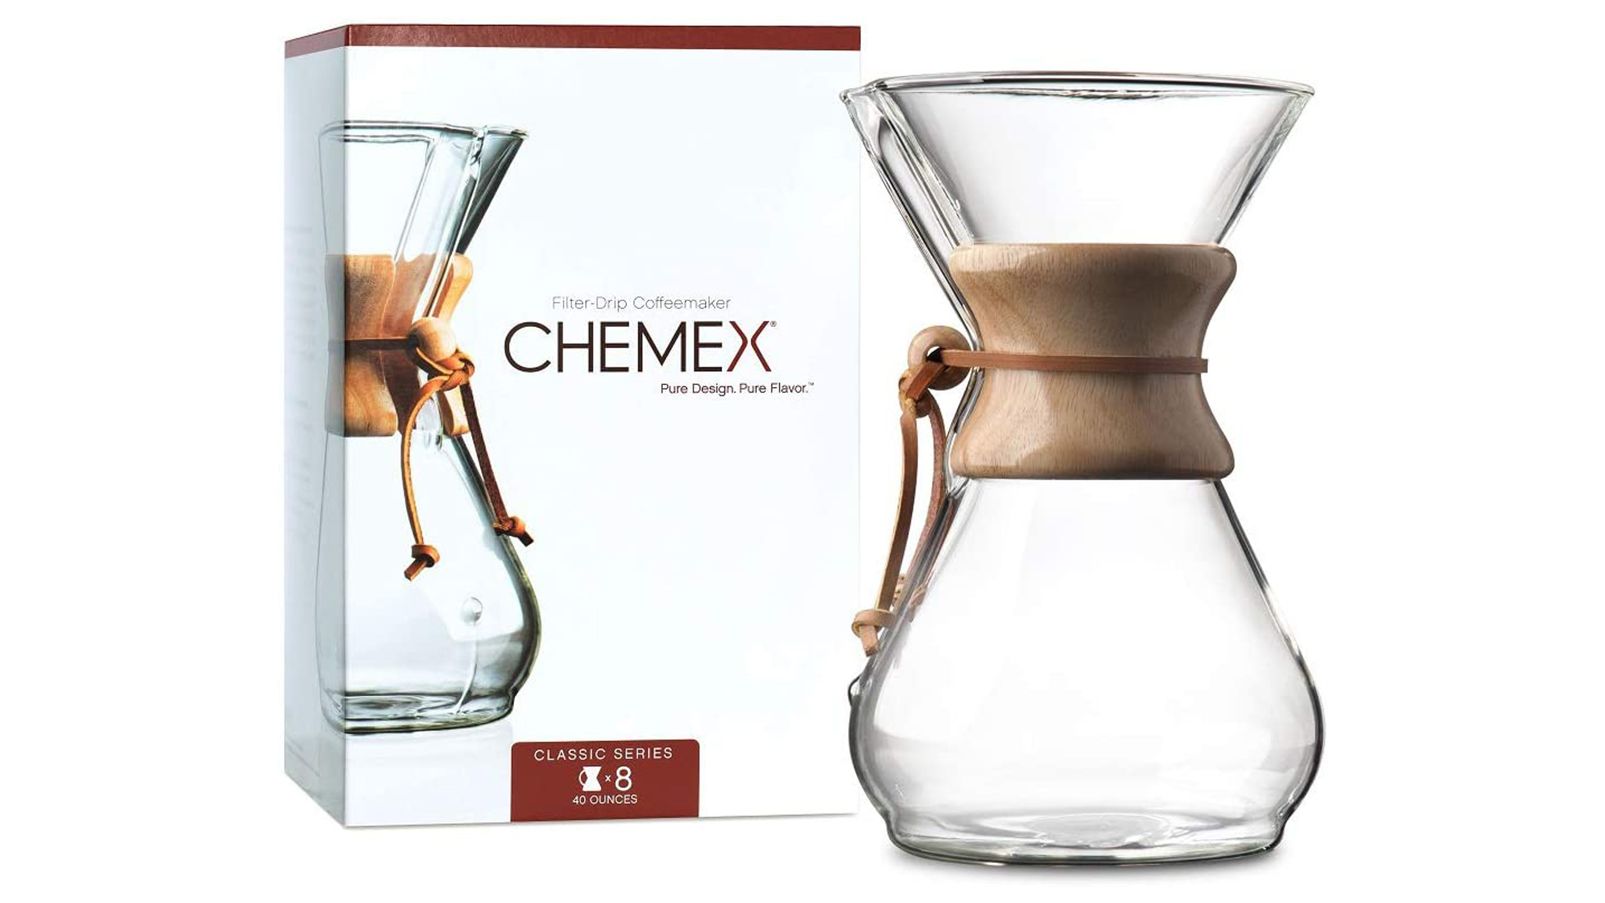 https://media.cnn.com/api/v1/images/stellar/prod/210303125538-best-pour-over-coffee-maker-chemex.jpg?q=w_1605,h_903,x_0,y_0,c_fill